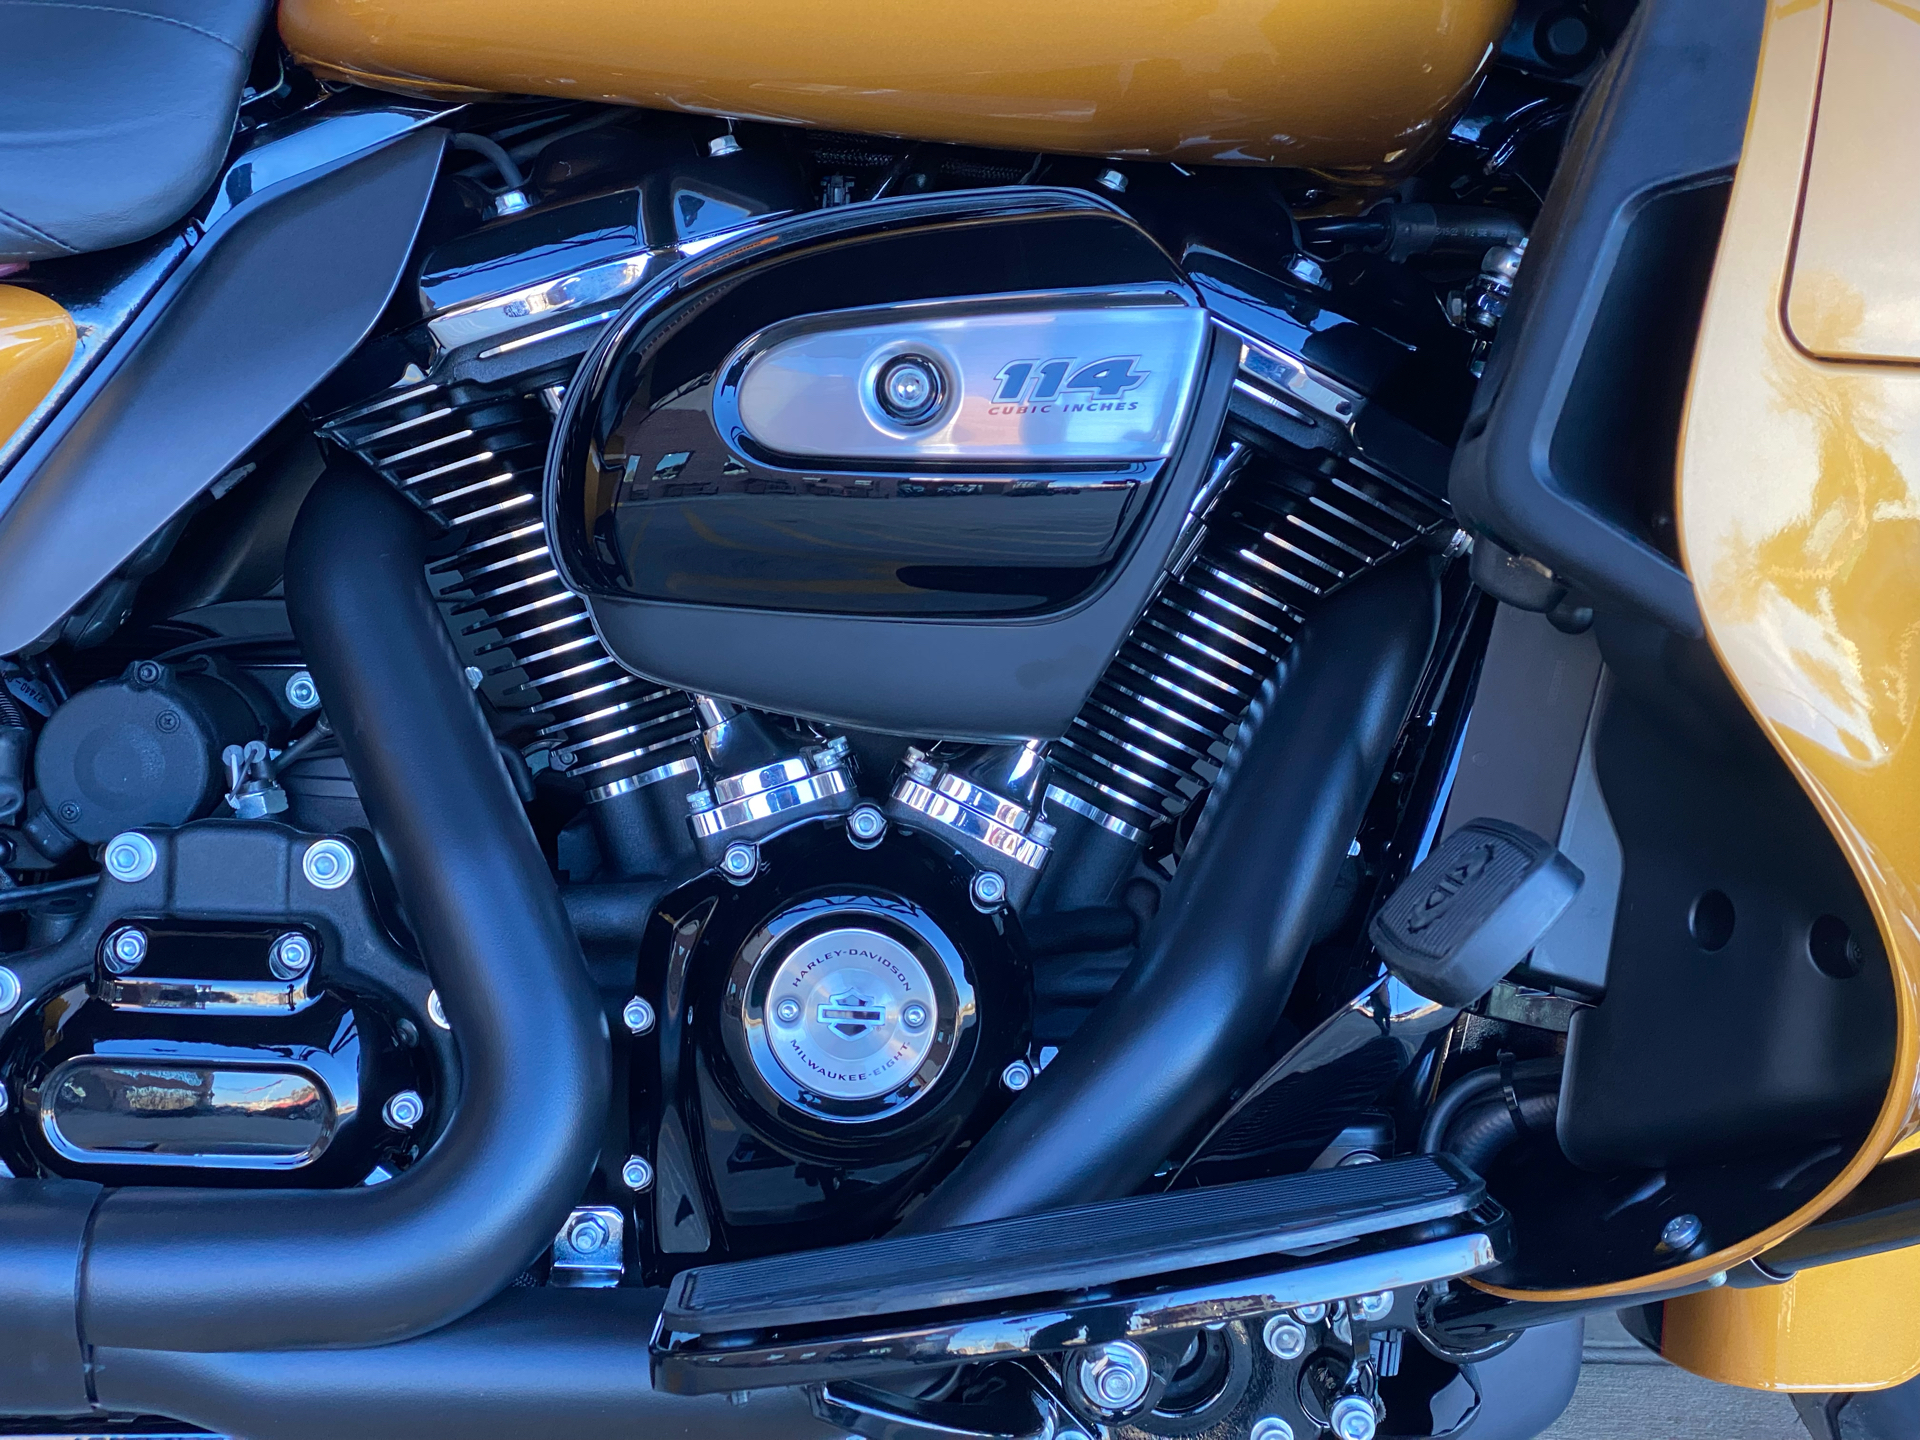 2023 Harley-Davidson Road Glide® Limited in Carrollton, Texas - Photo 7